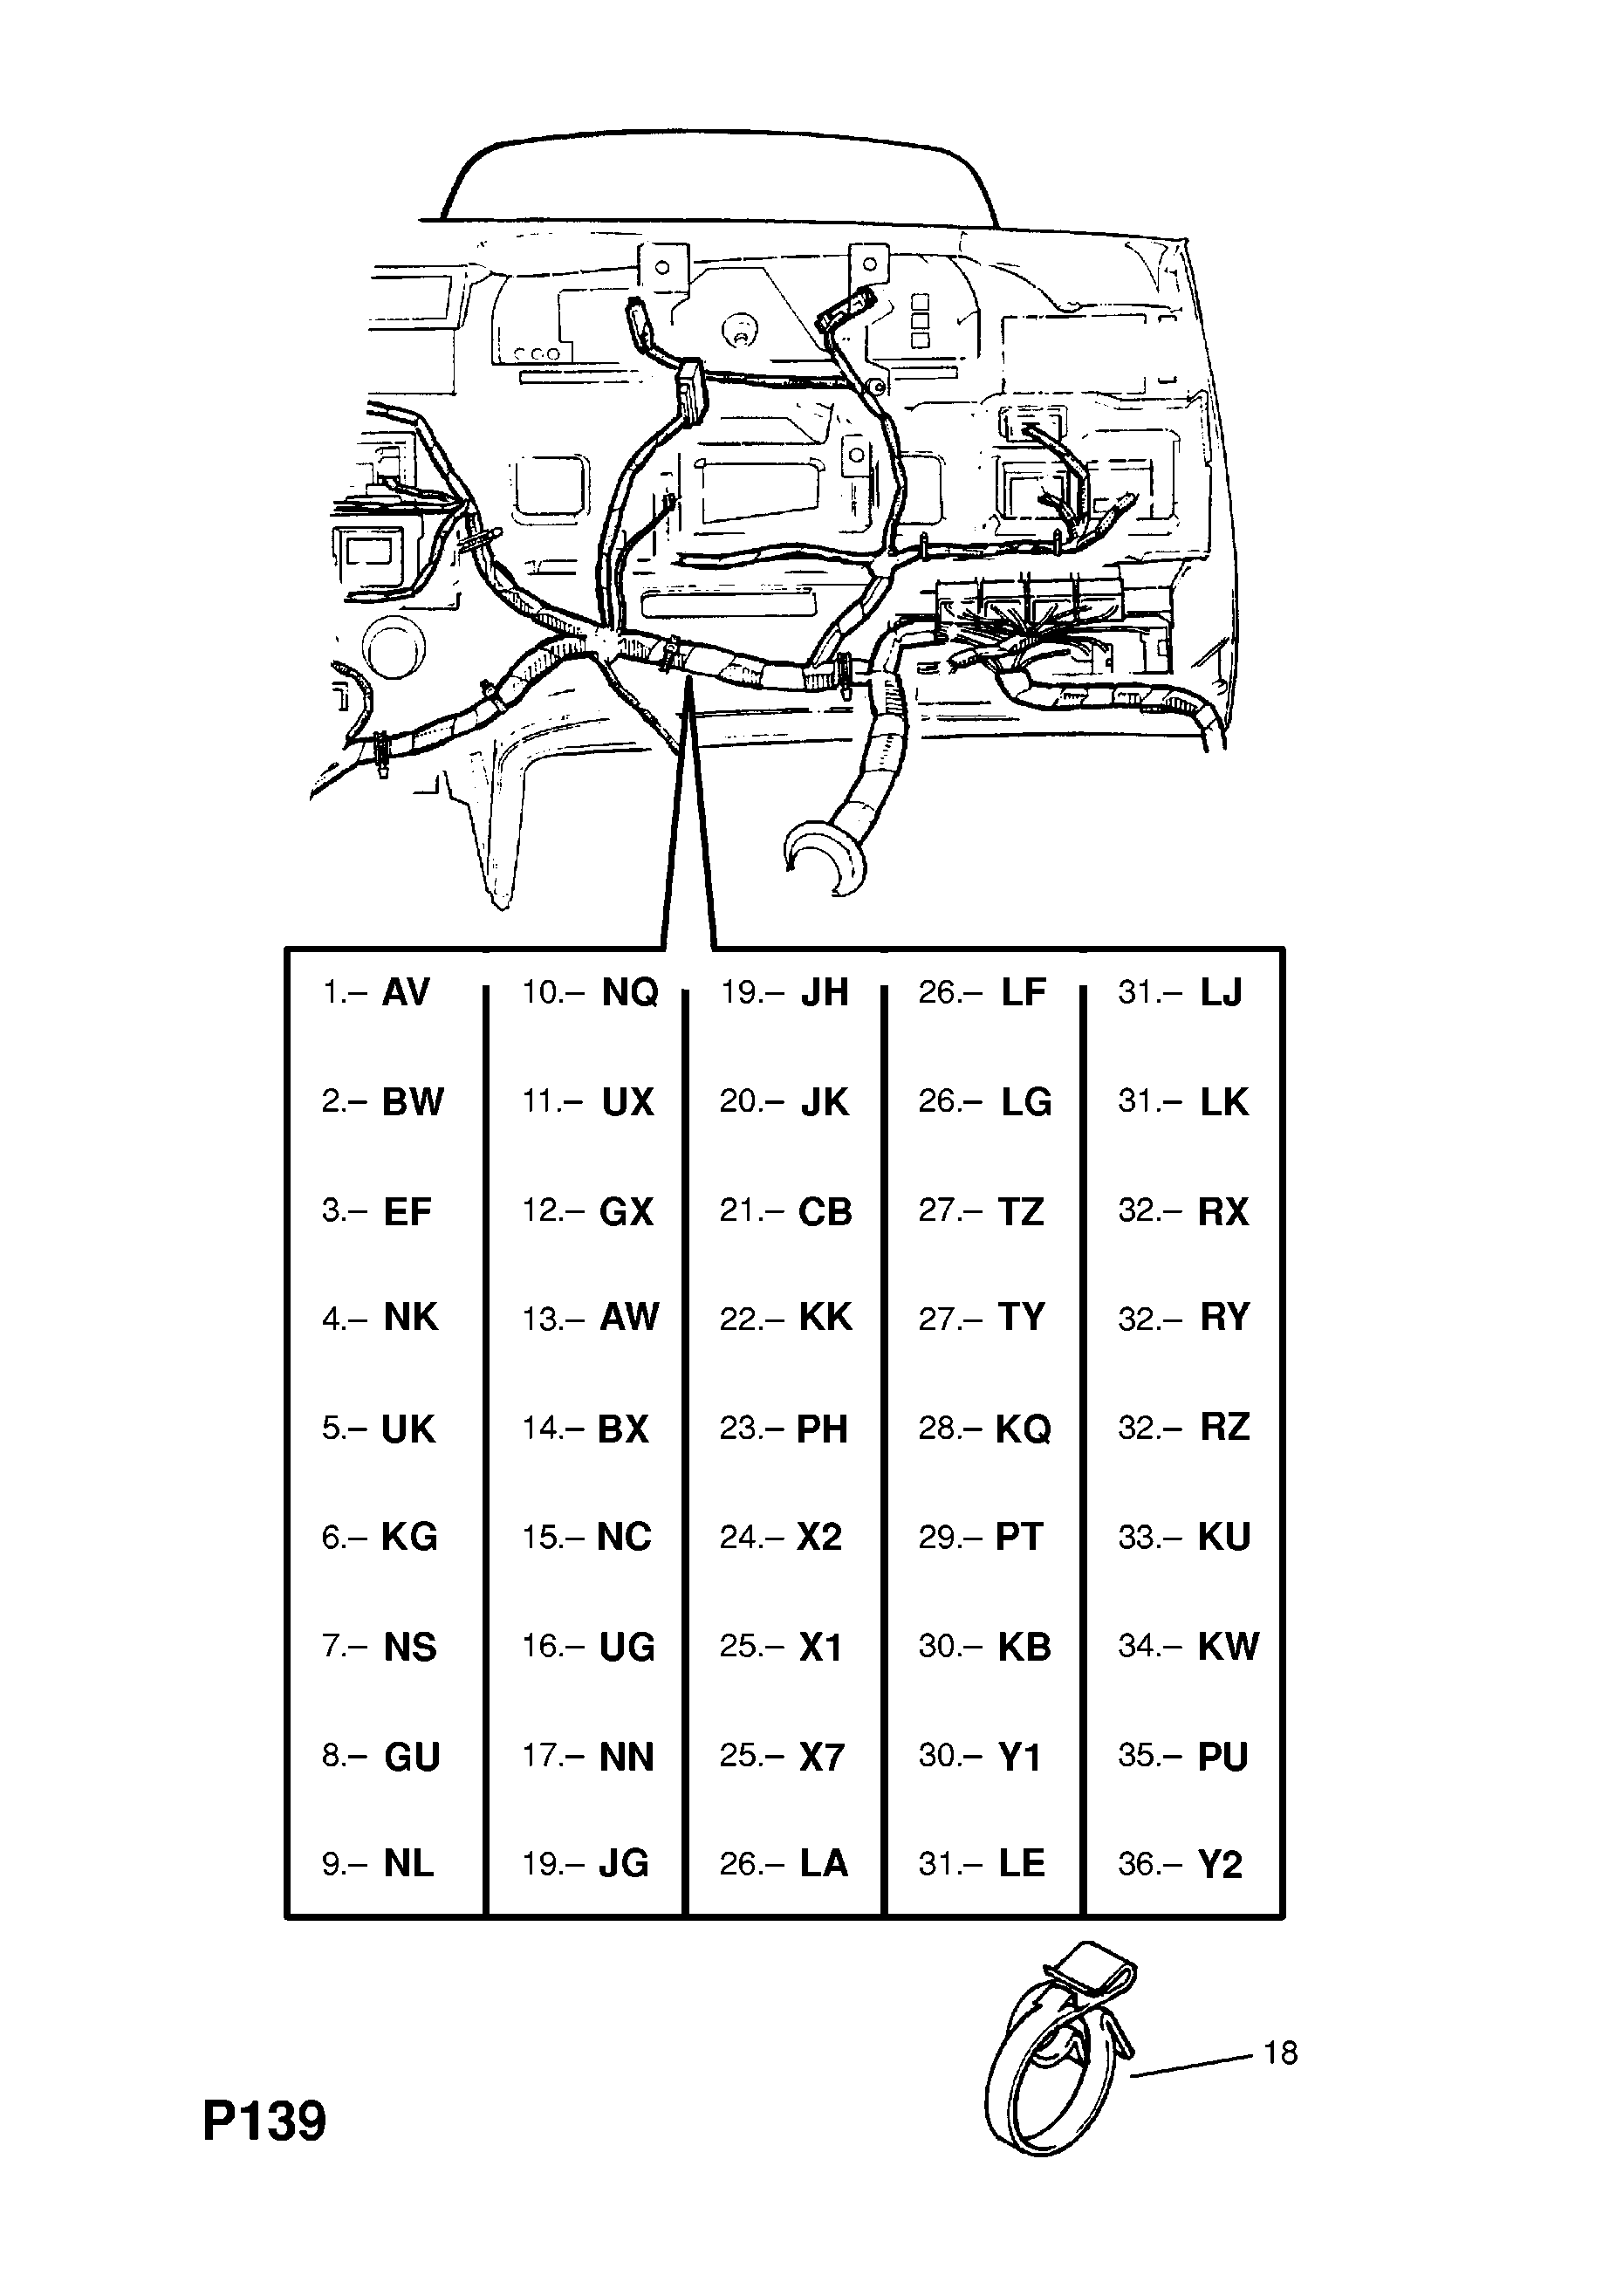 GOSTERGE TABLOSU KABLO DEMETI (DEVAM EDIYOR) <small><i>[LCD GOSTERGELER HARIC (RHD) (ISVEC,ISVICRE HARIC)]</i></small>